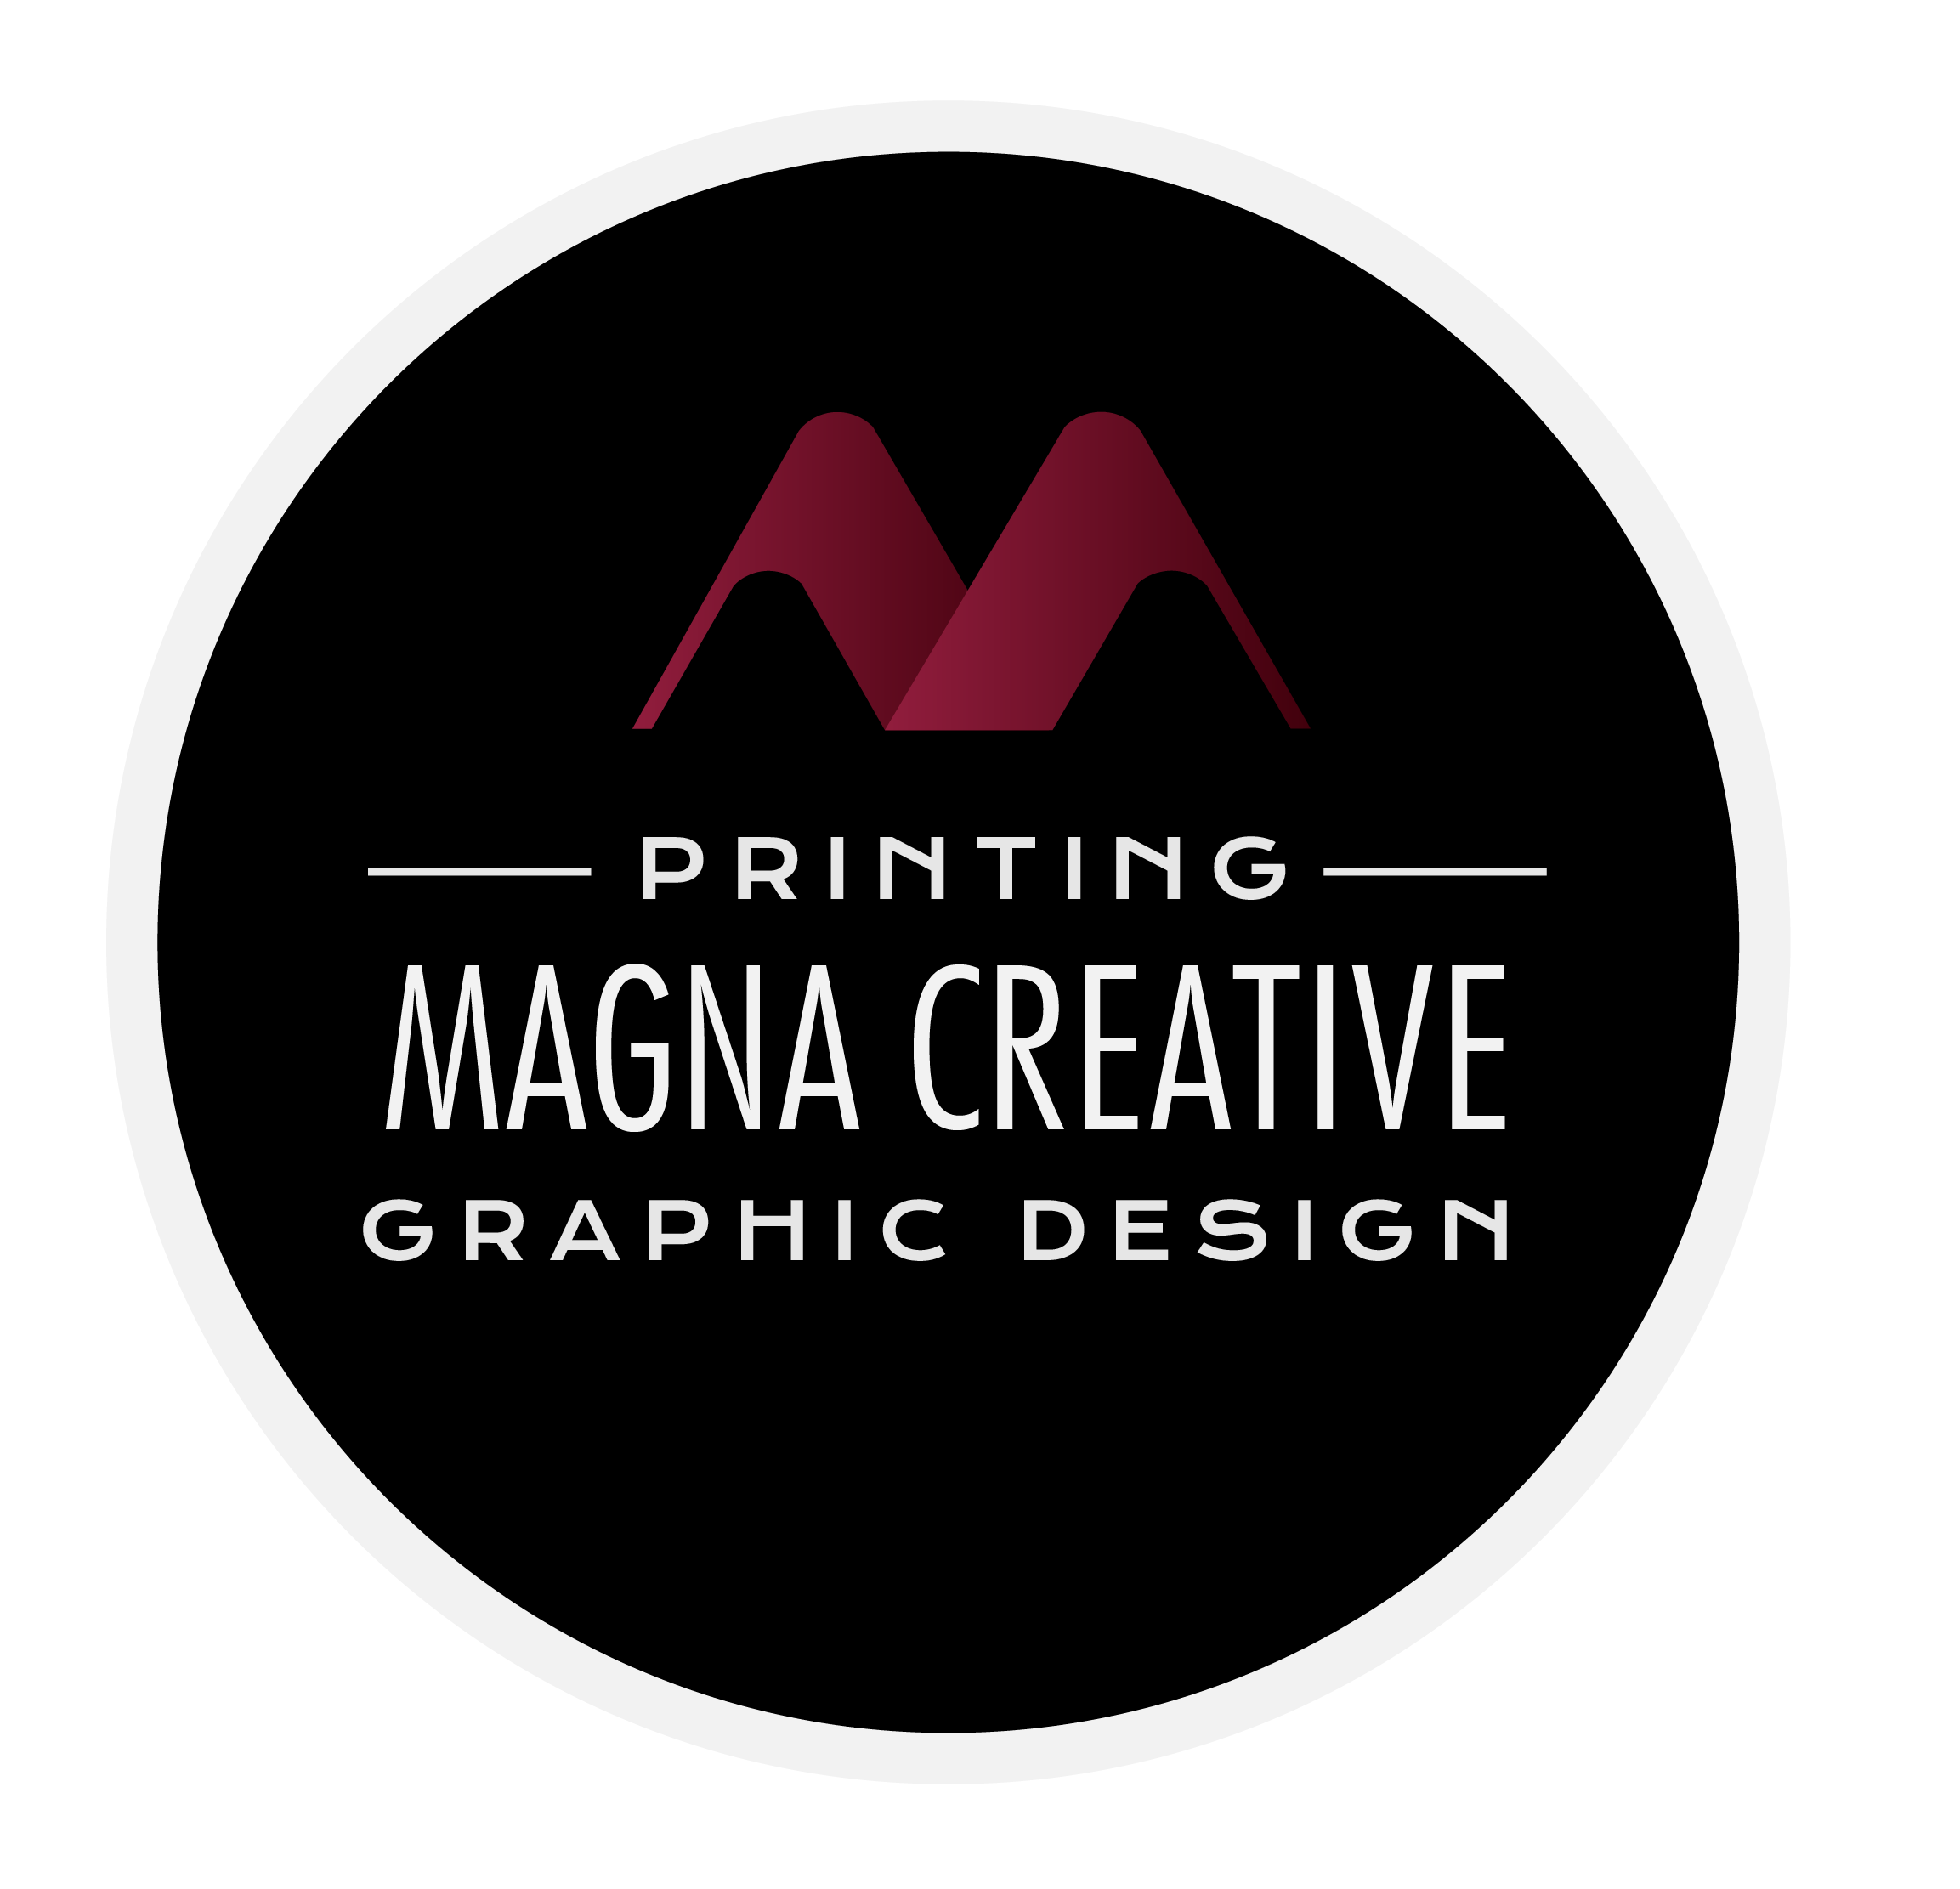 Magna Creative